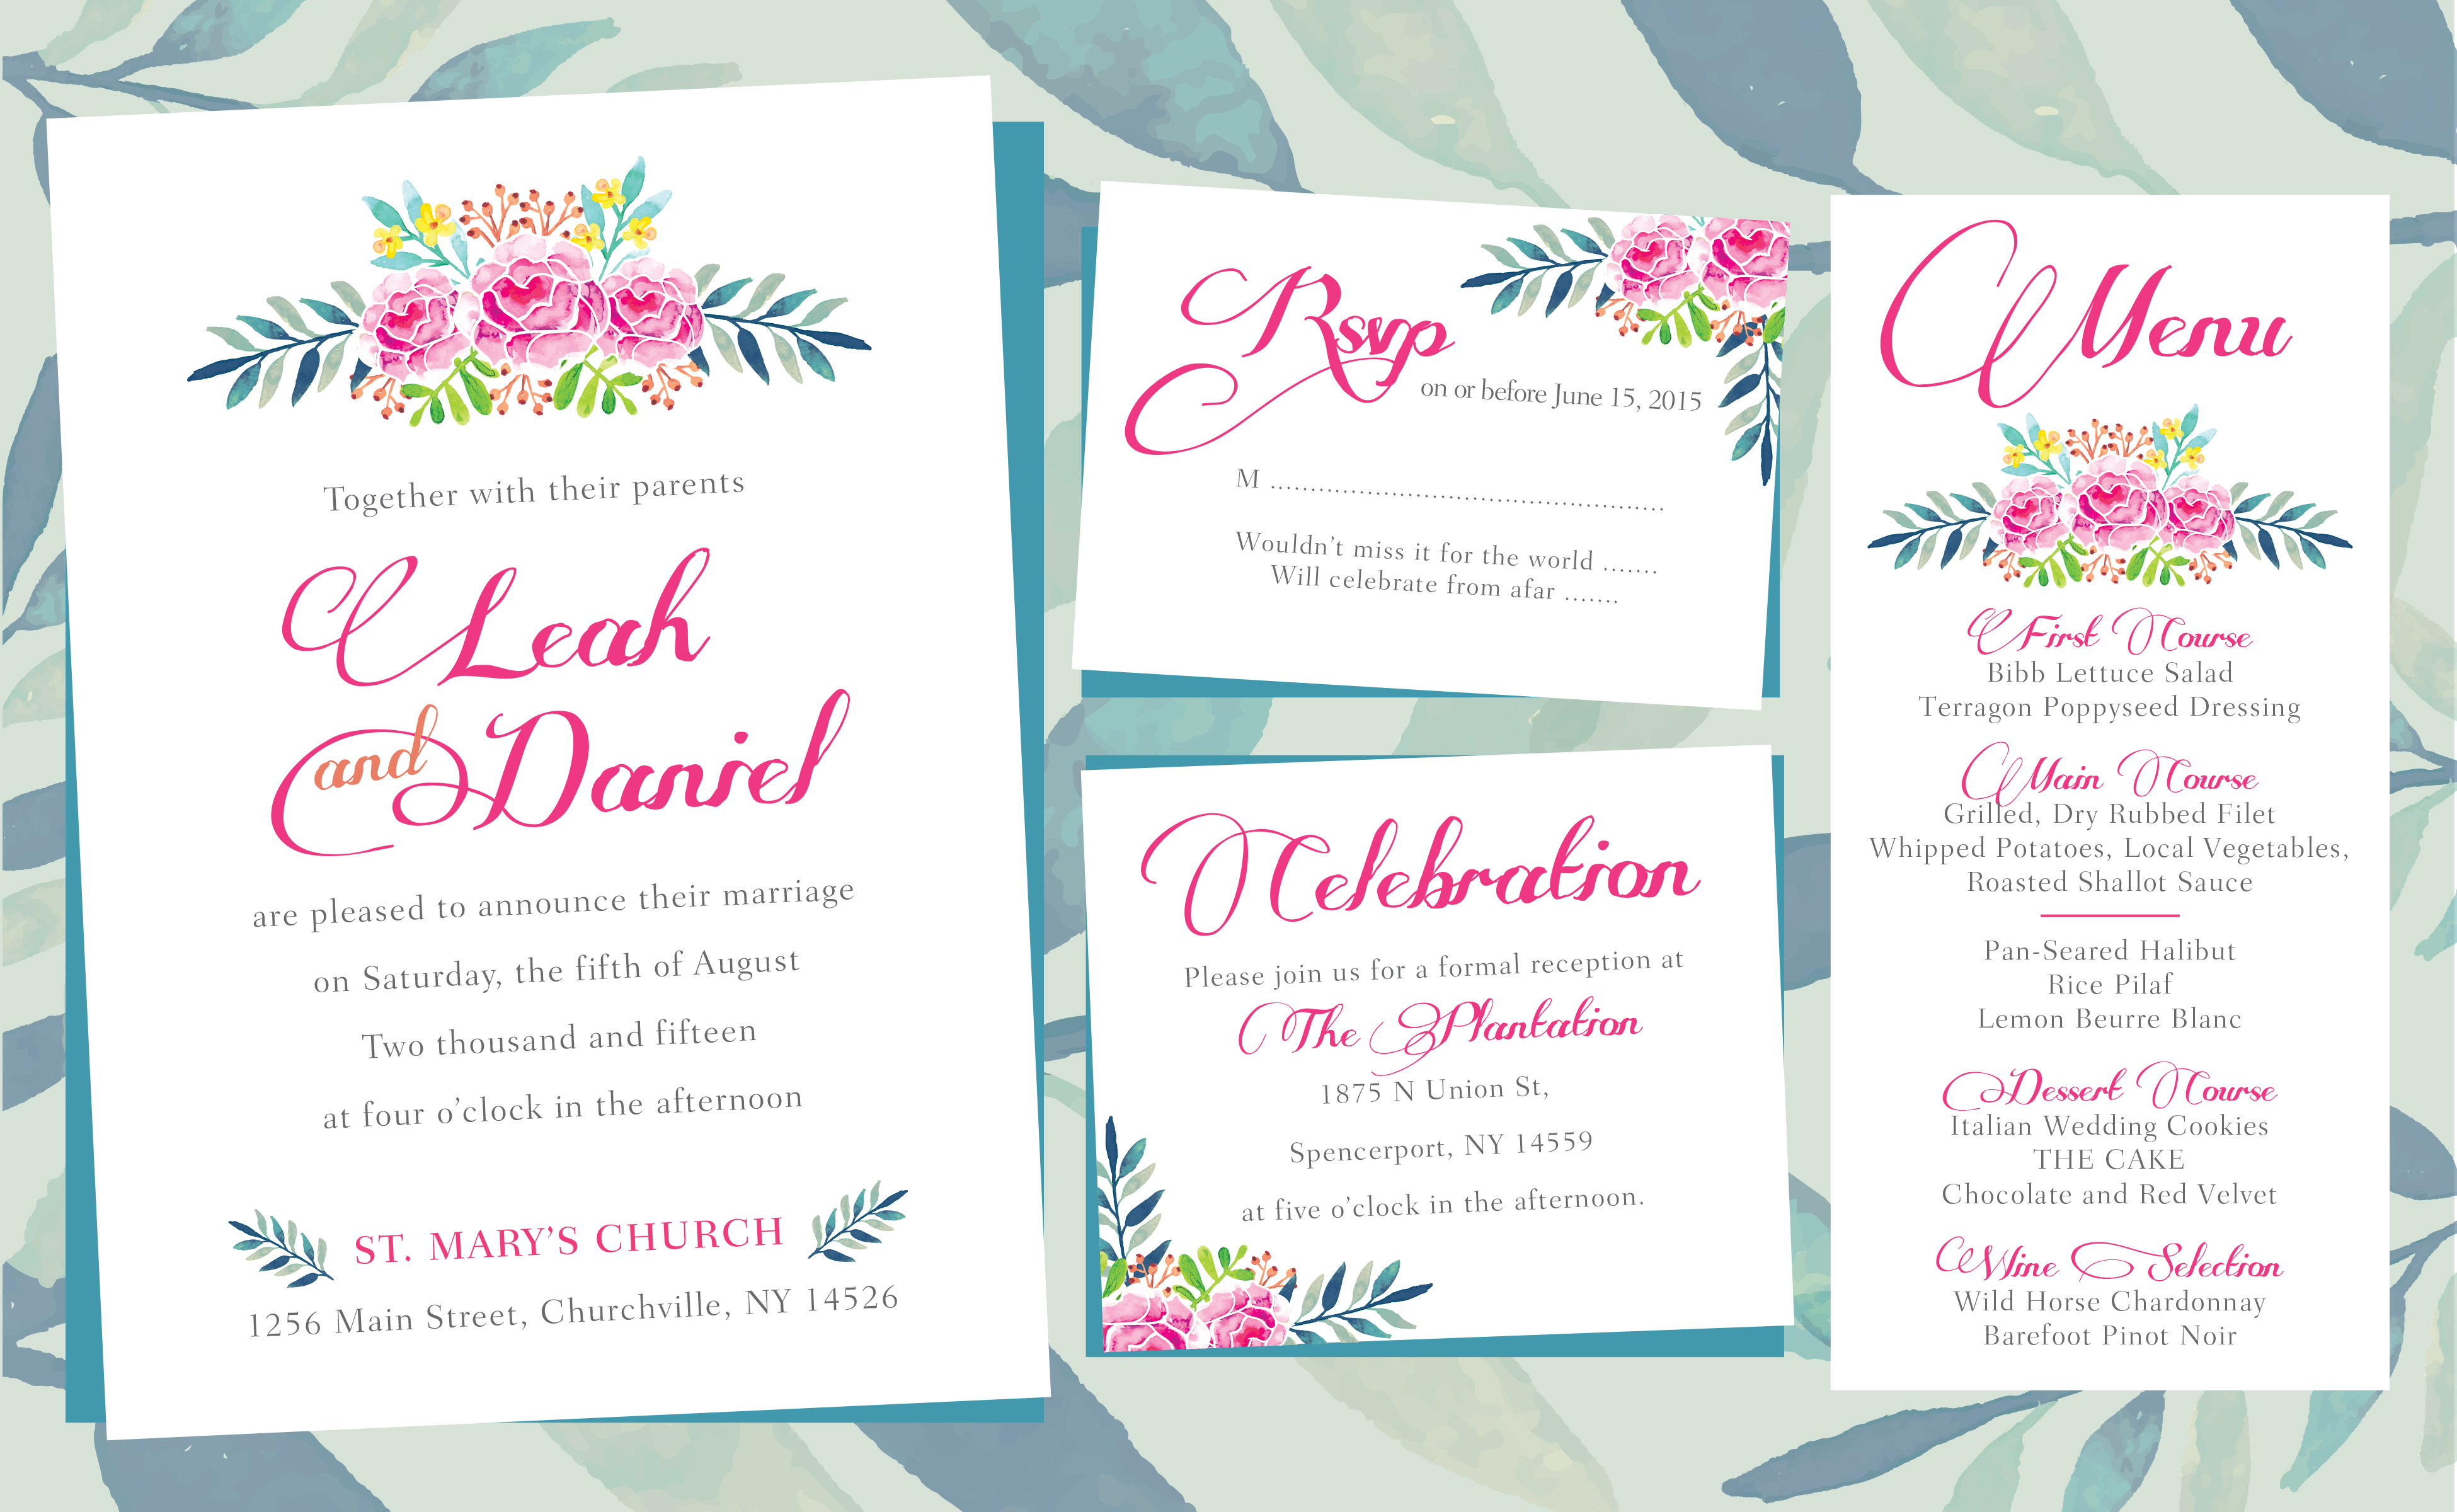 16 Printable Wedding Invitation Templates You Can DIY